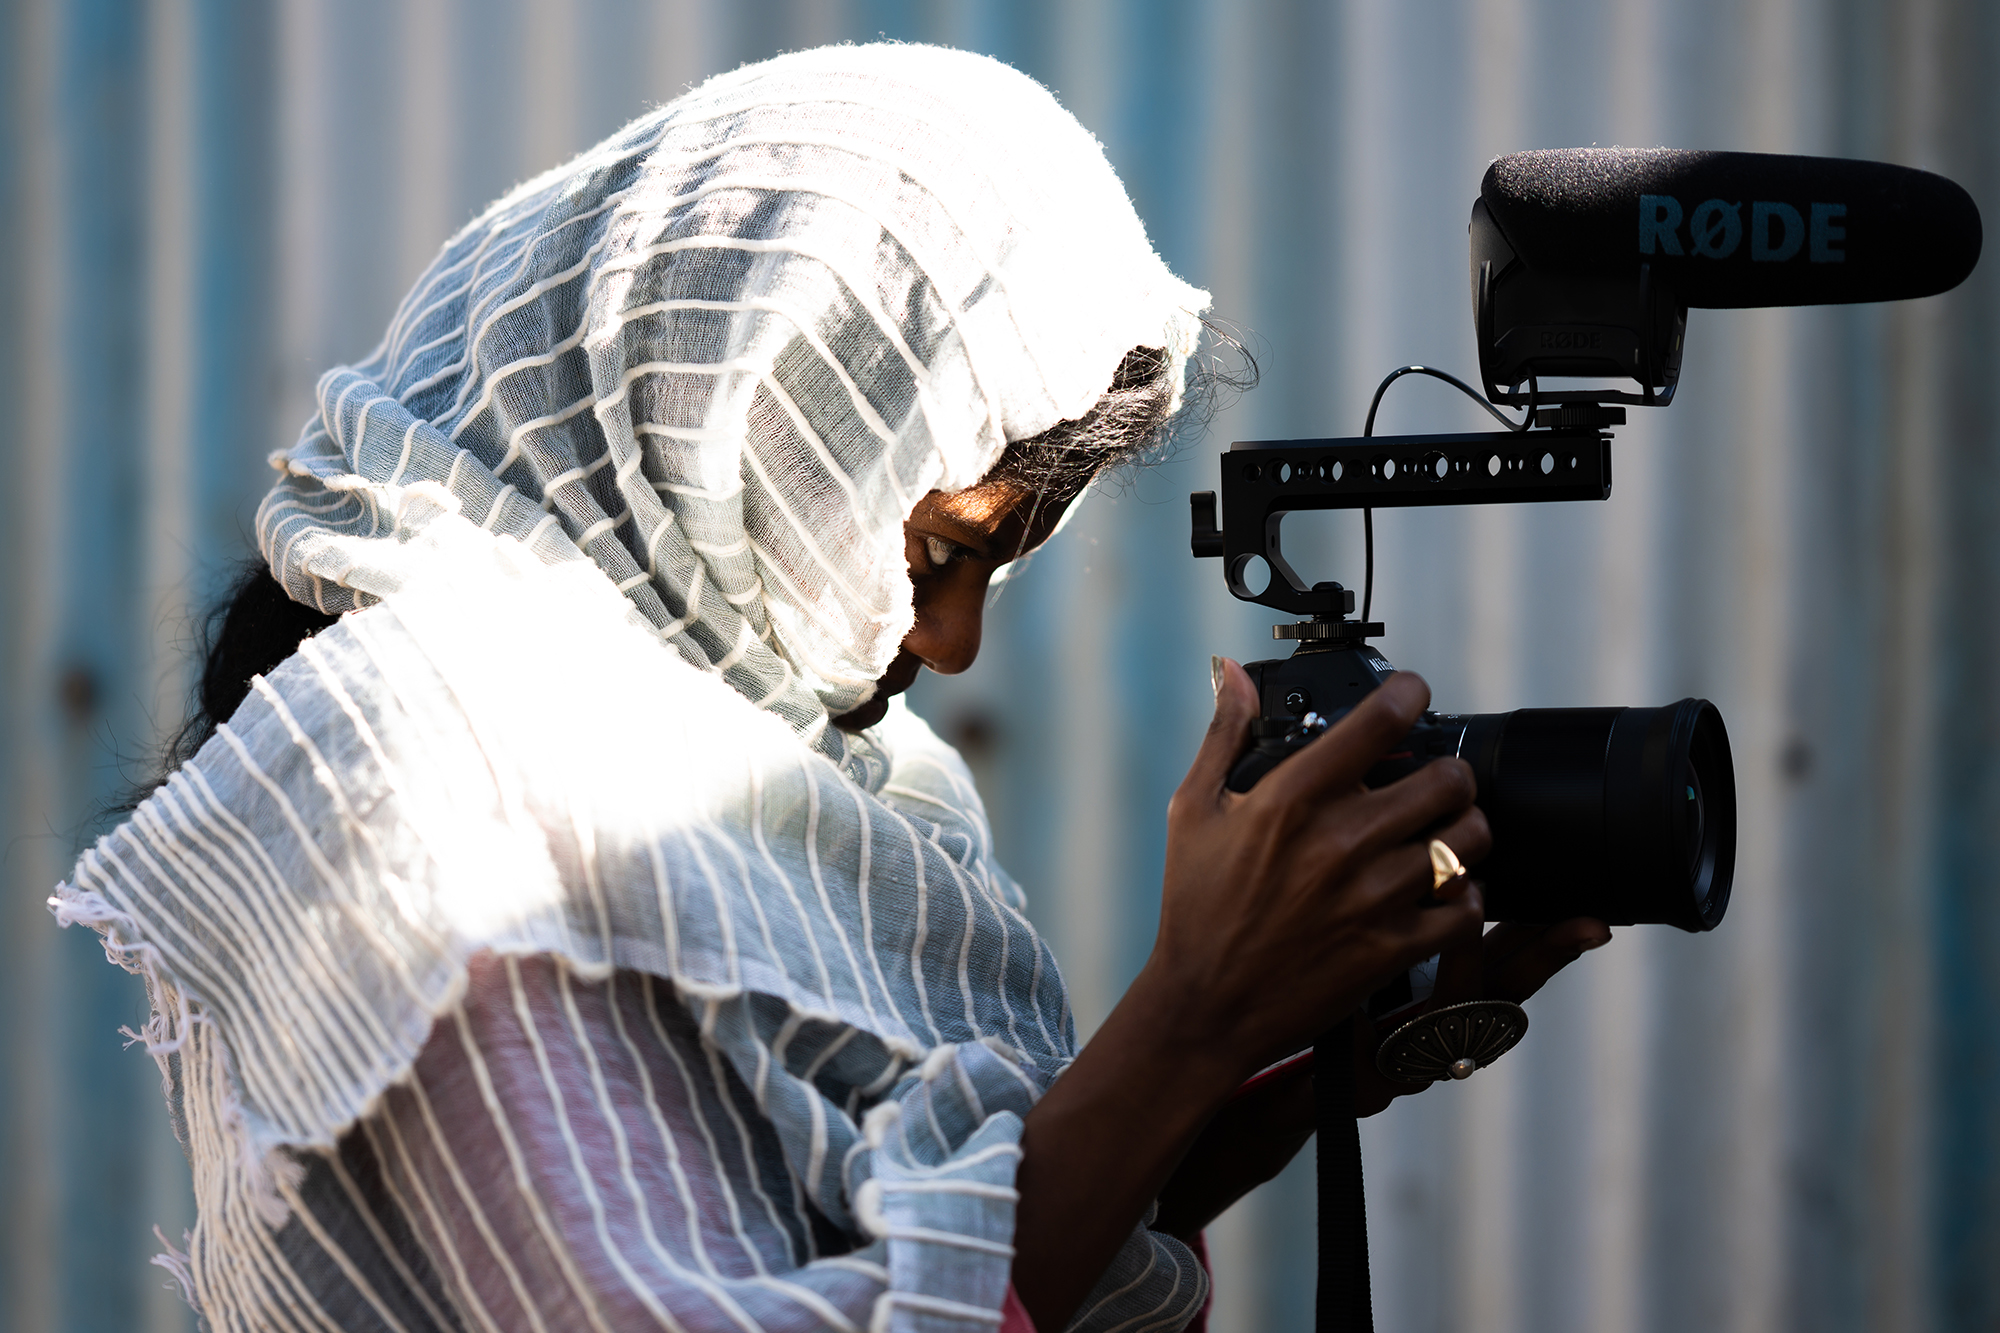 sosena filming with video camera